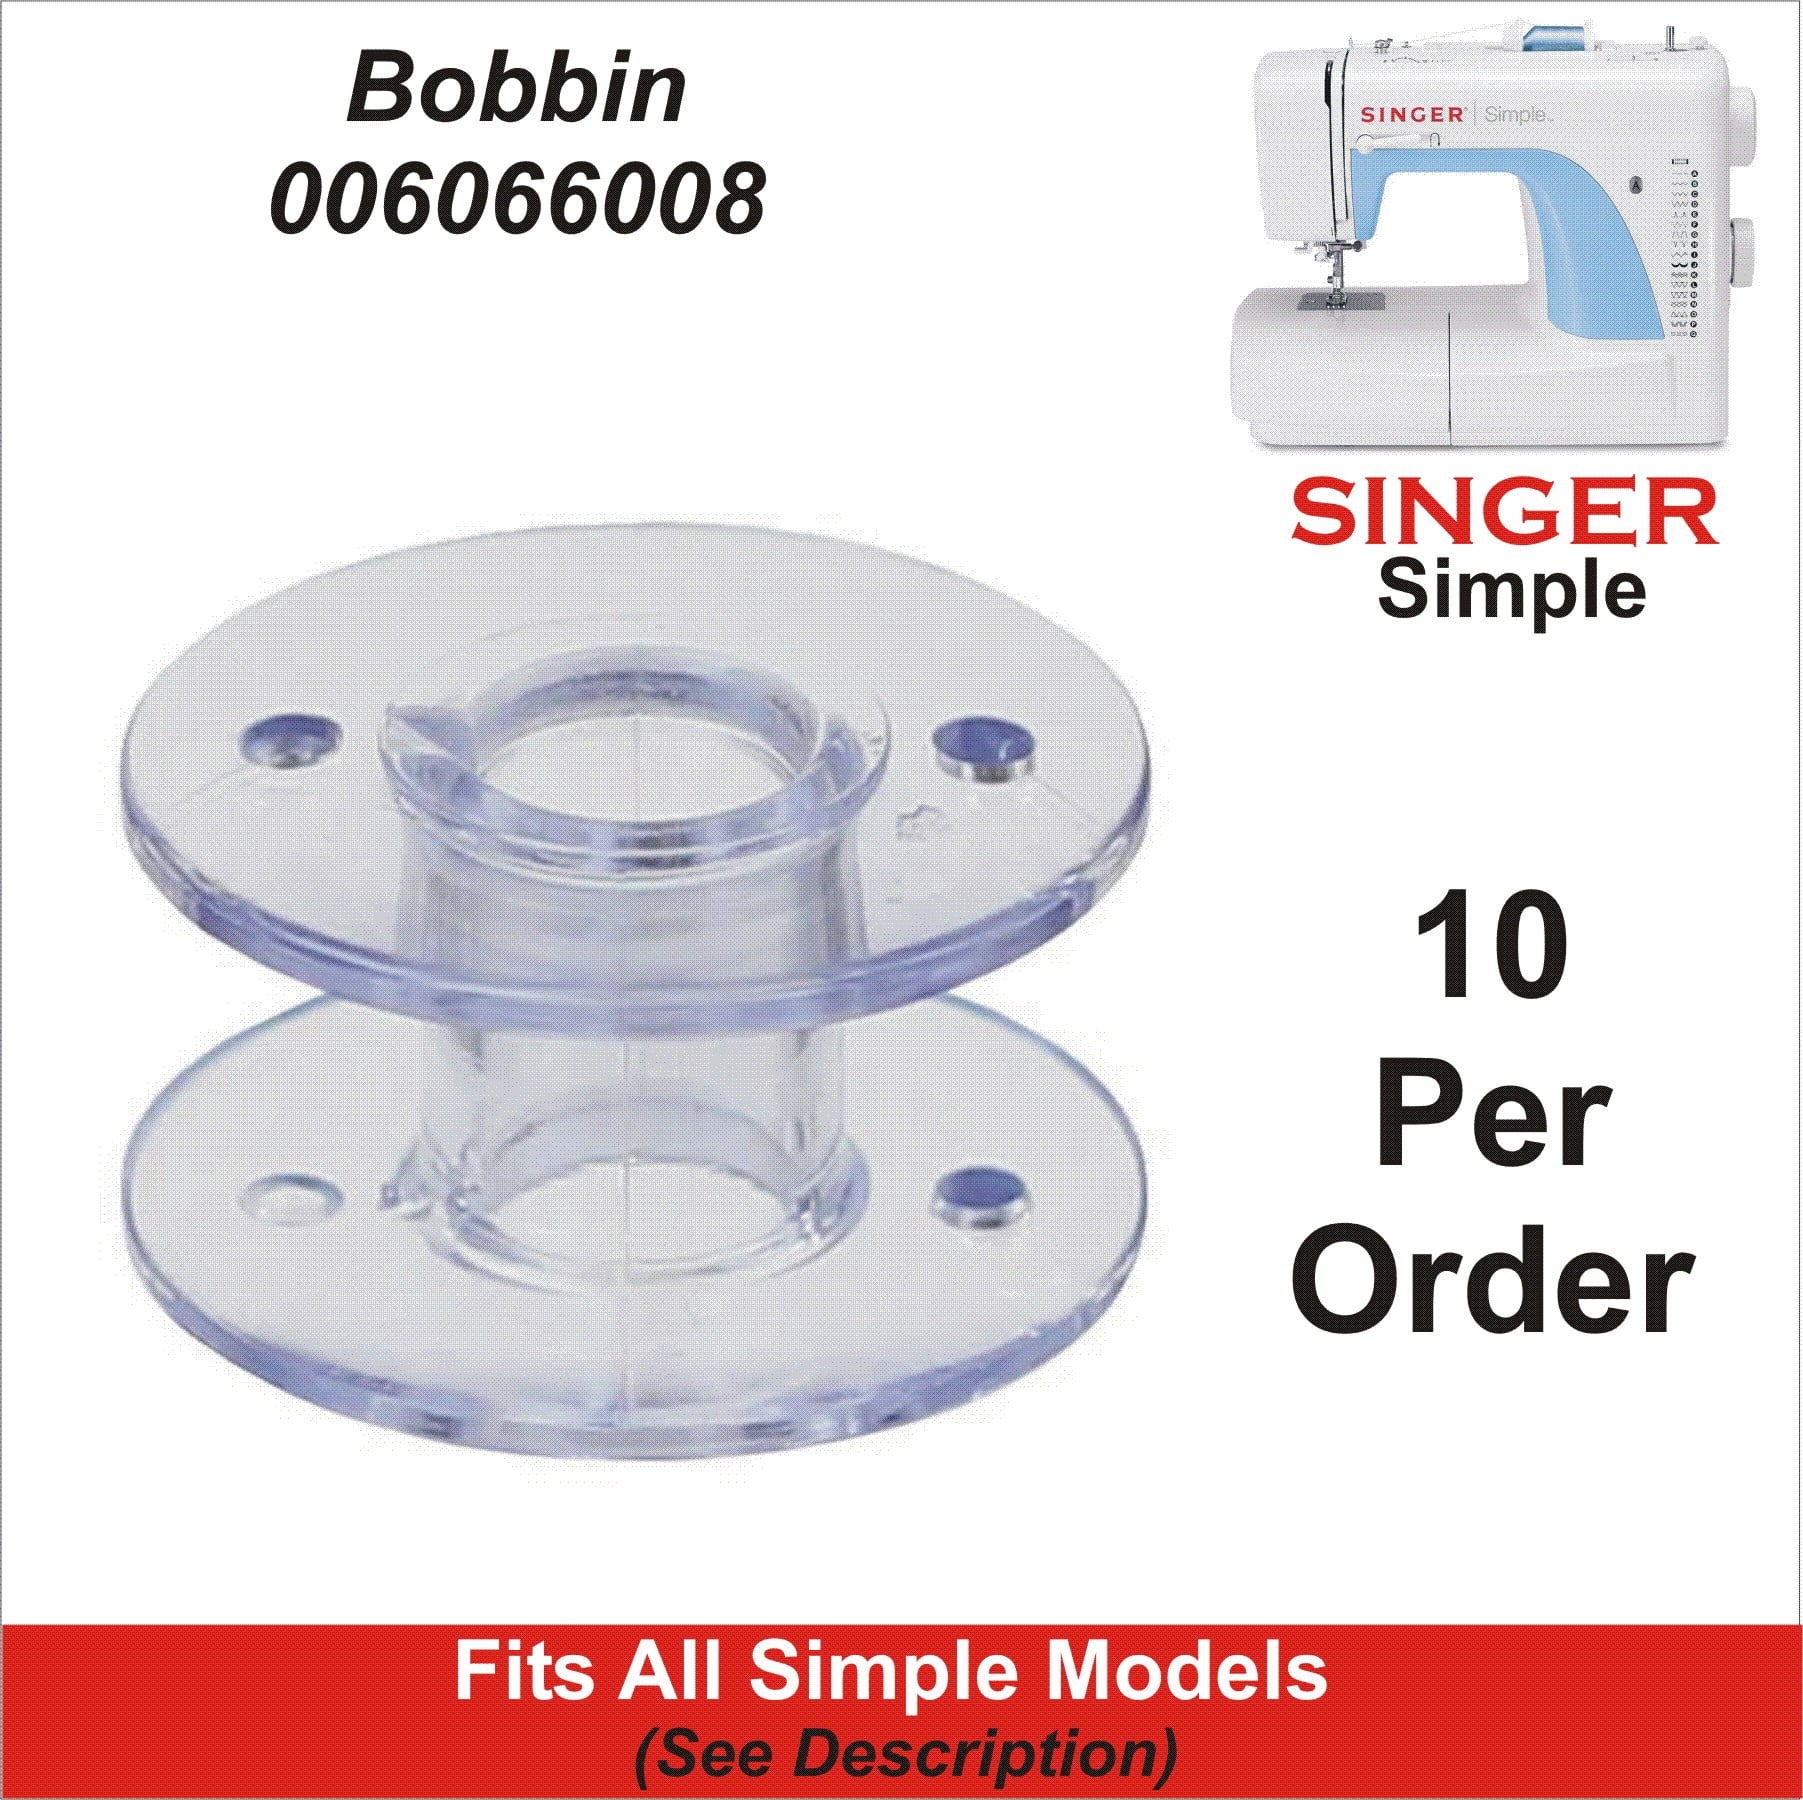 Singer Sewing Machine Bobbins 10 Pack Fits Models 6000 Series